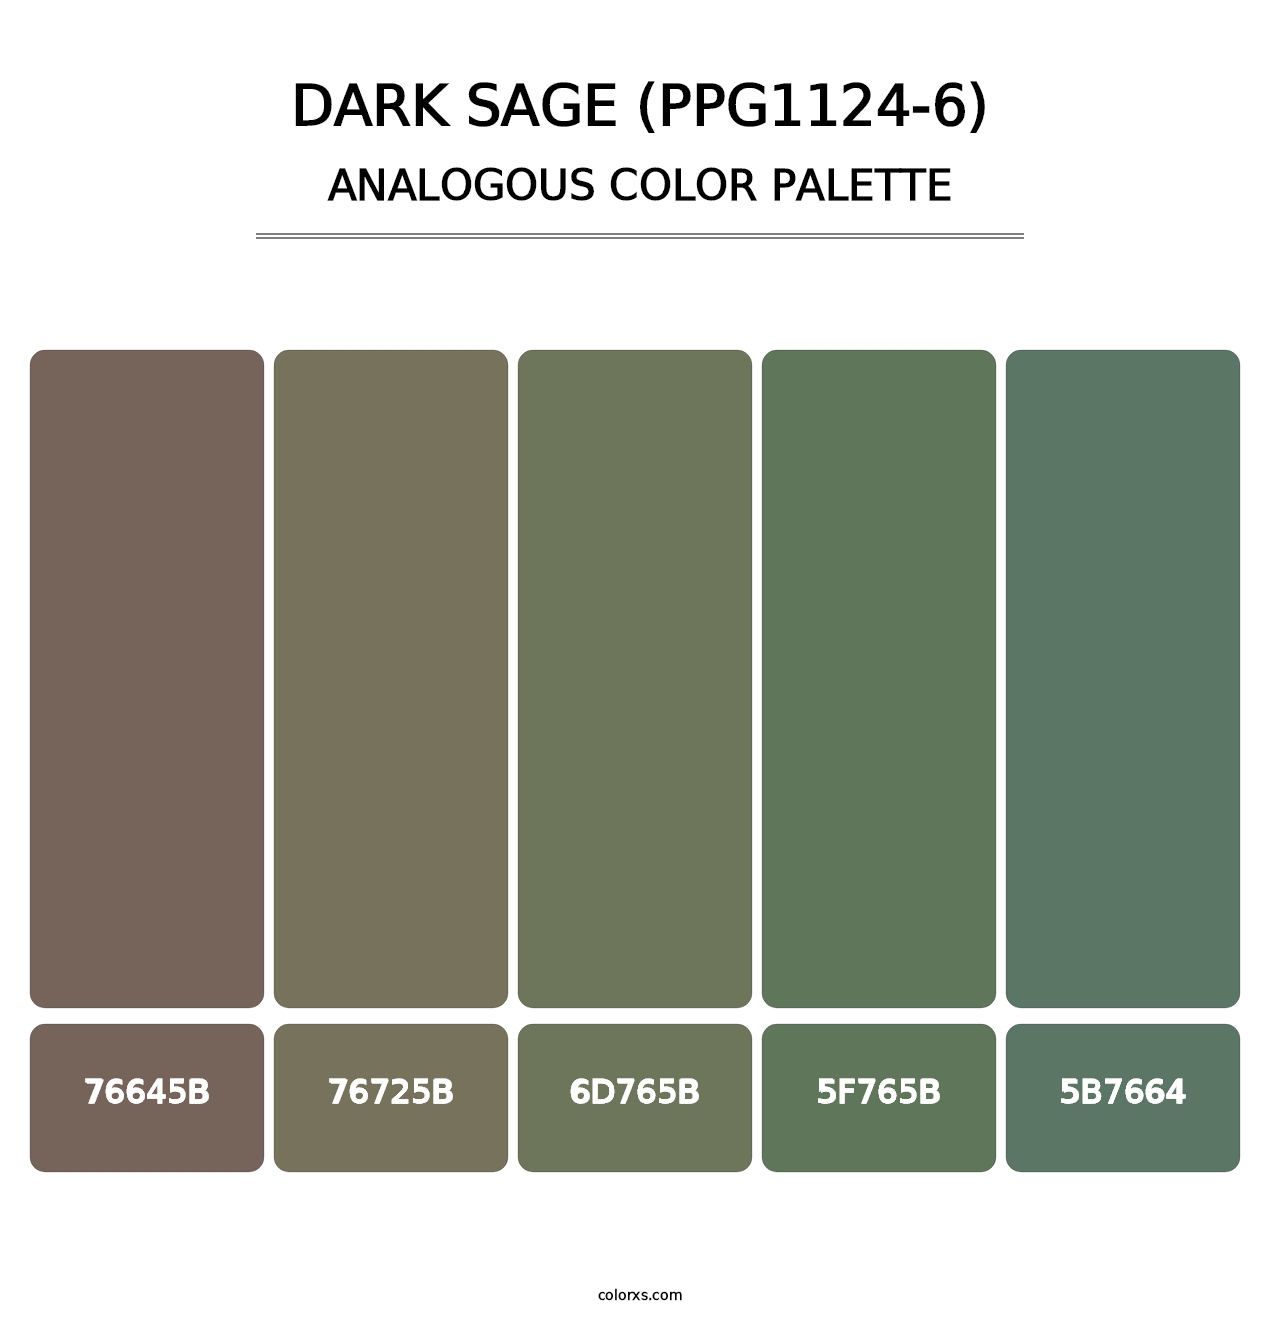 Dark Sage (PPG1124-6) - Analogous Color Palette